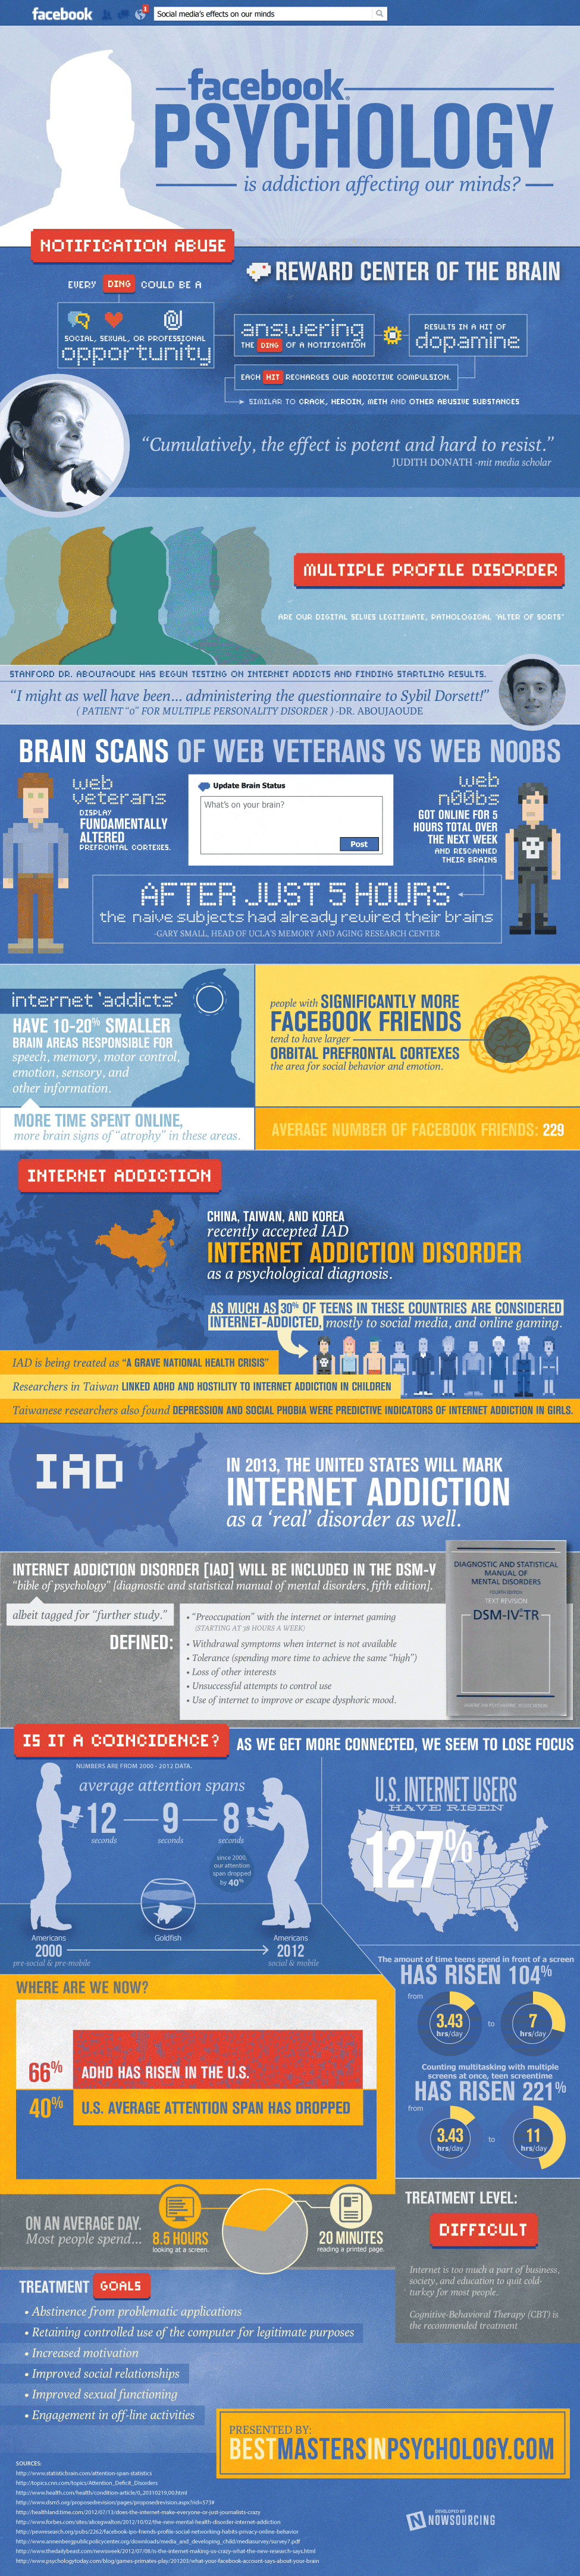 Internet Addiction Disorder-Infographic